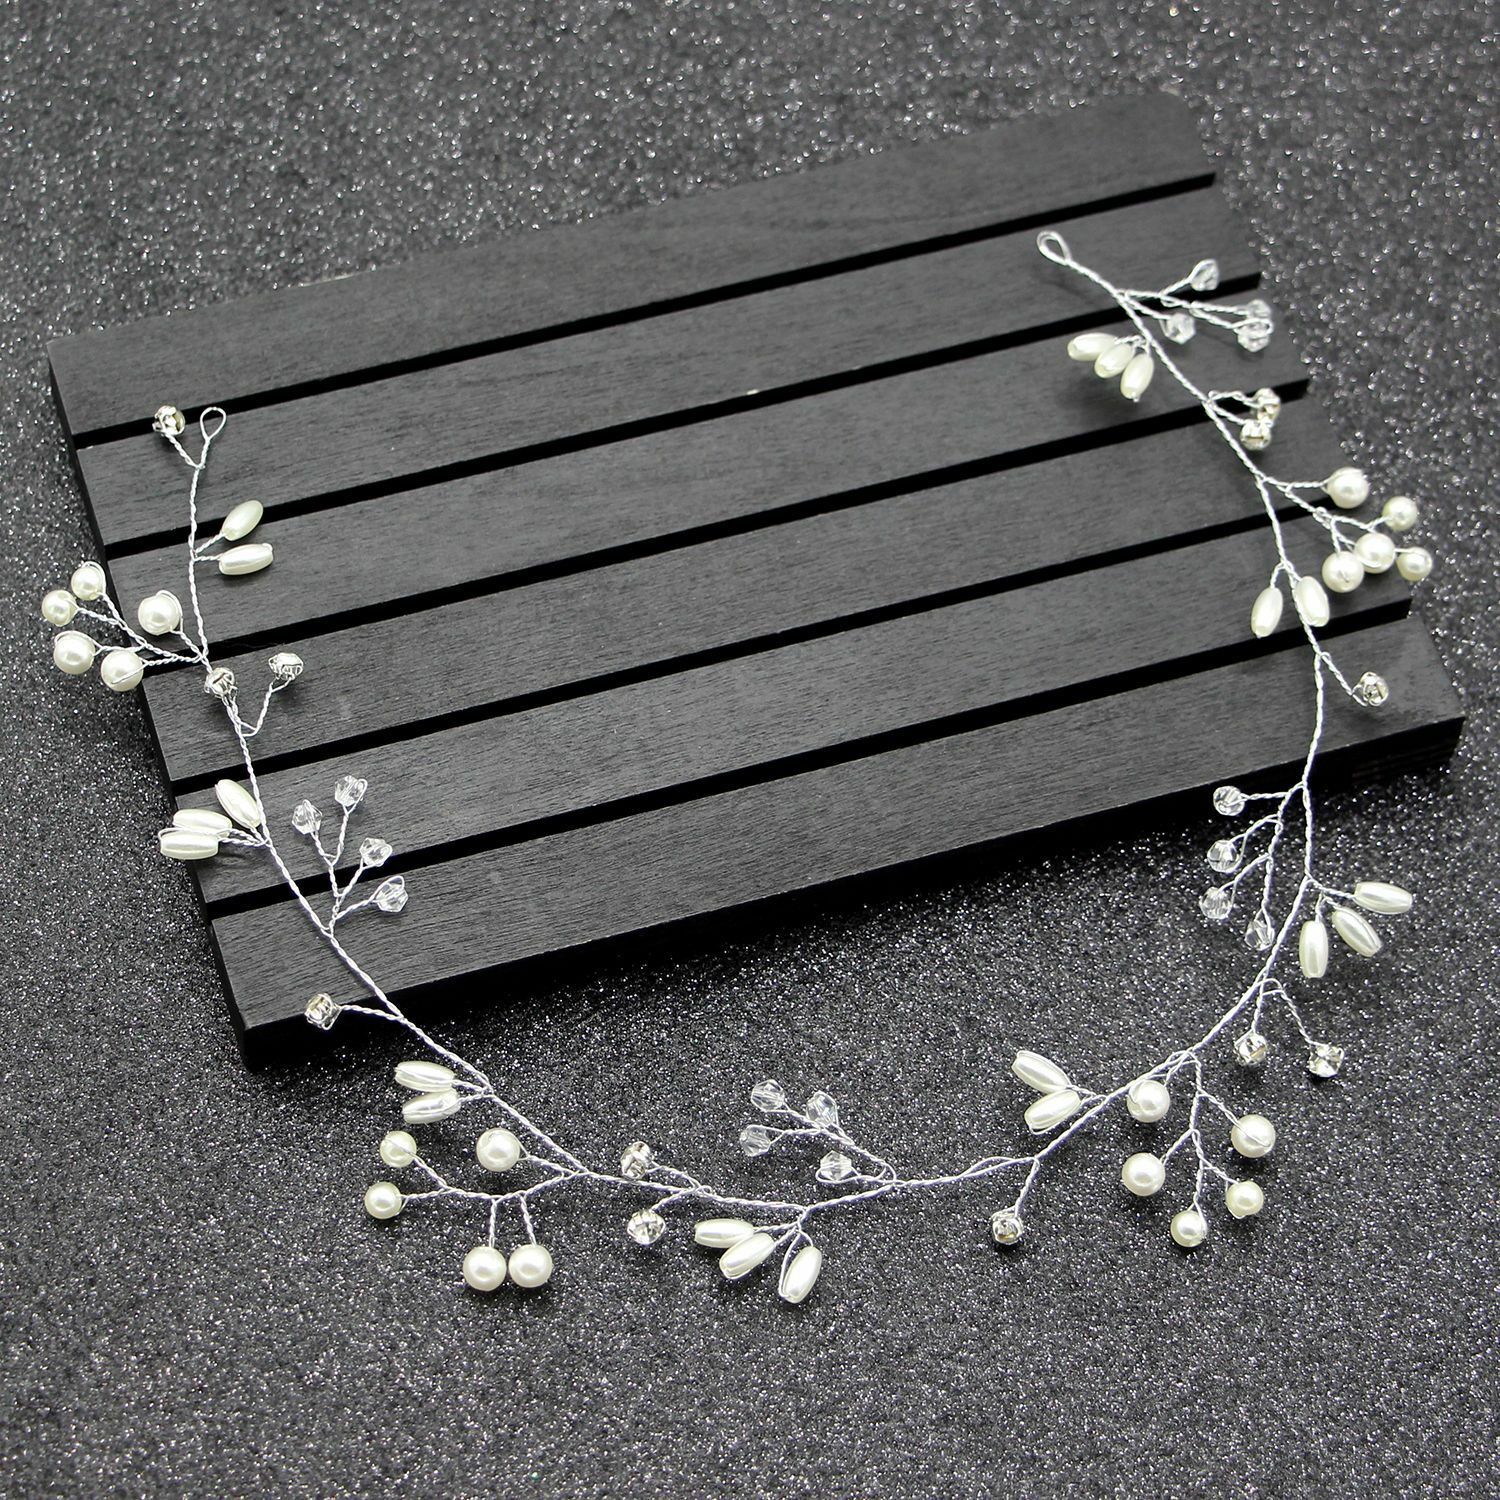 1Pcs NEW Pearls Wedding Hair Vine Crystal Bridal Accessories Diamante Headpiece